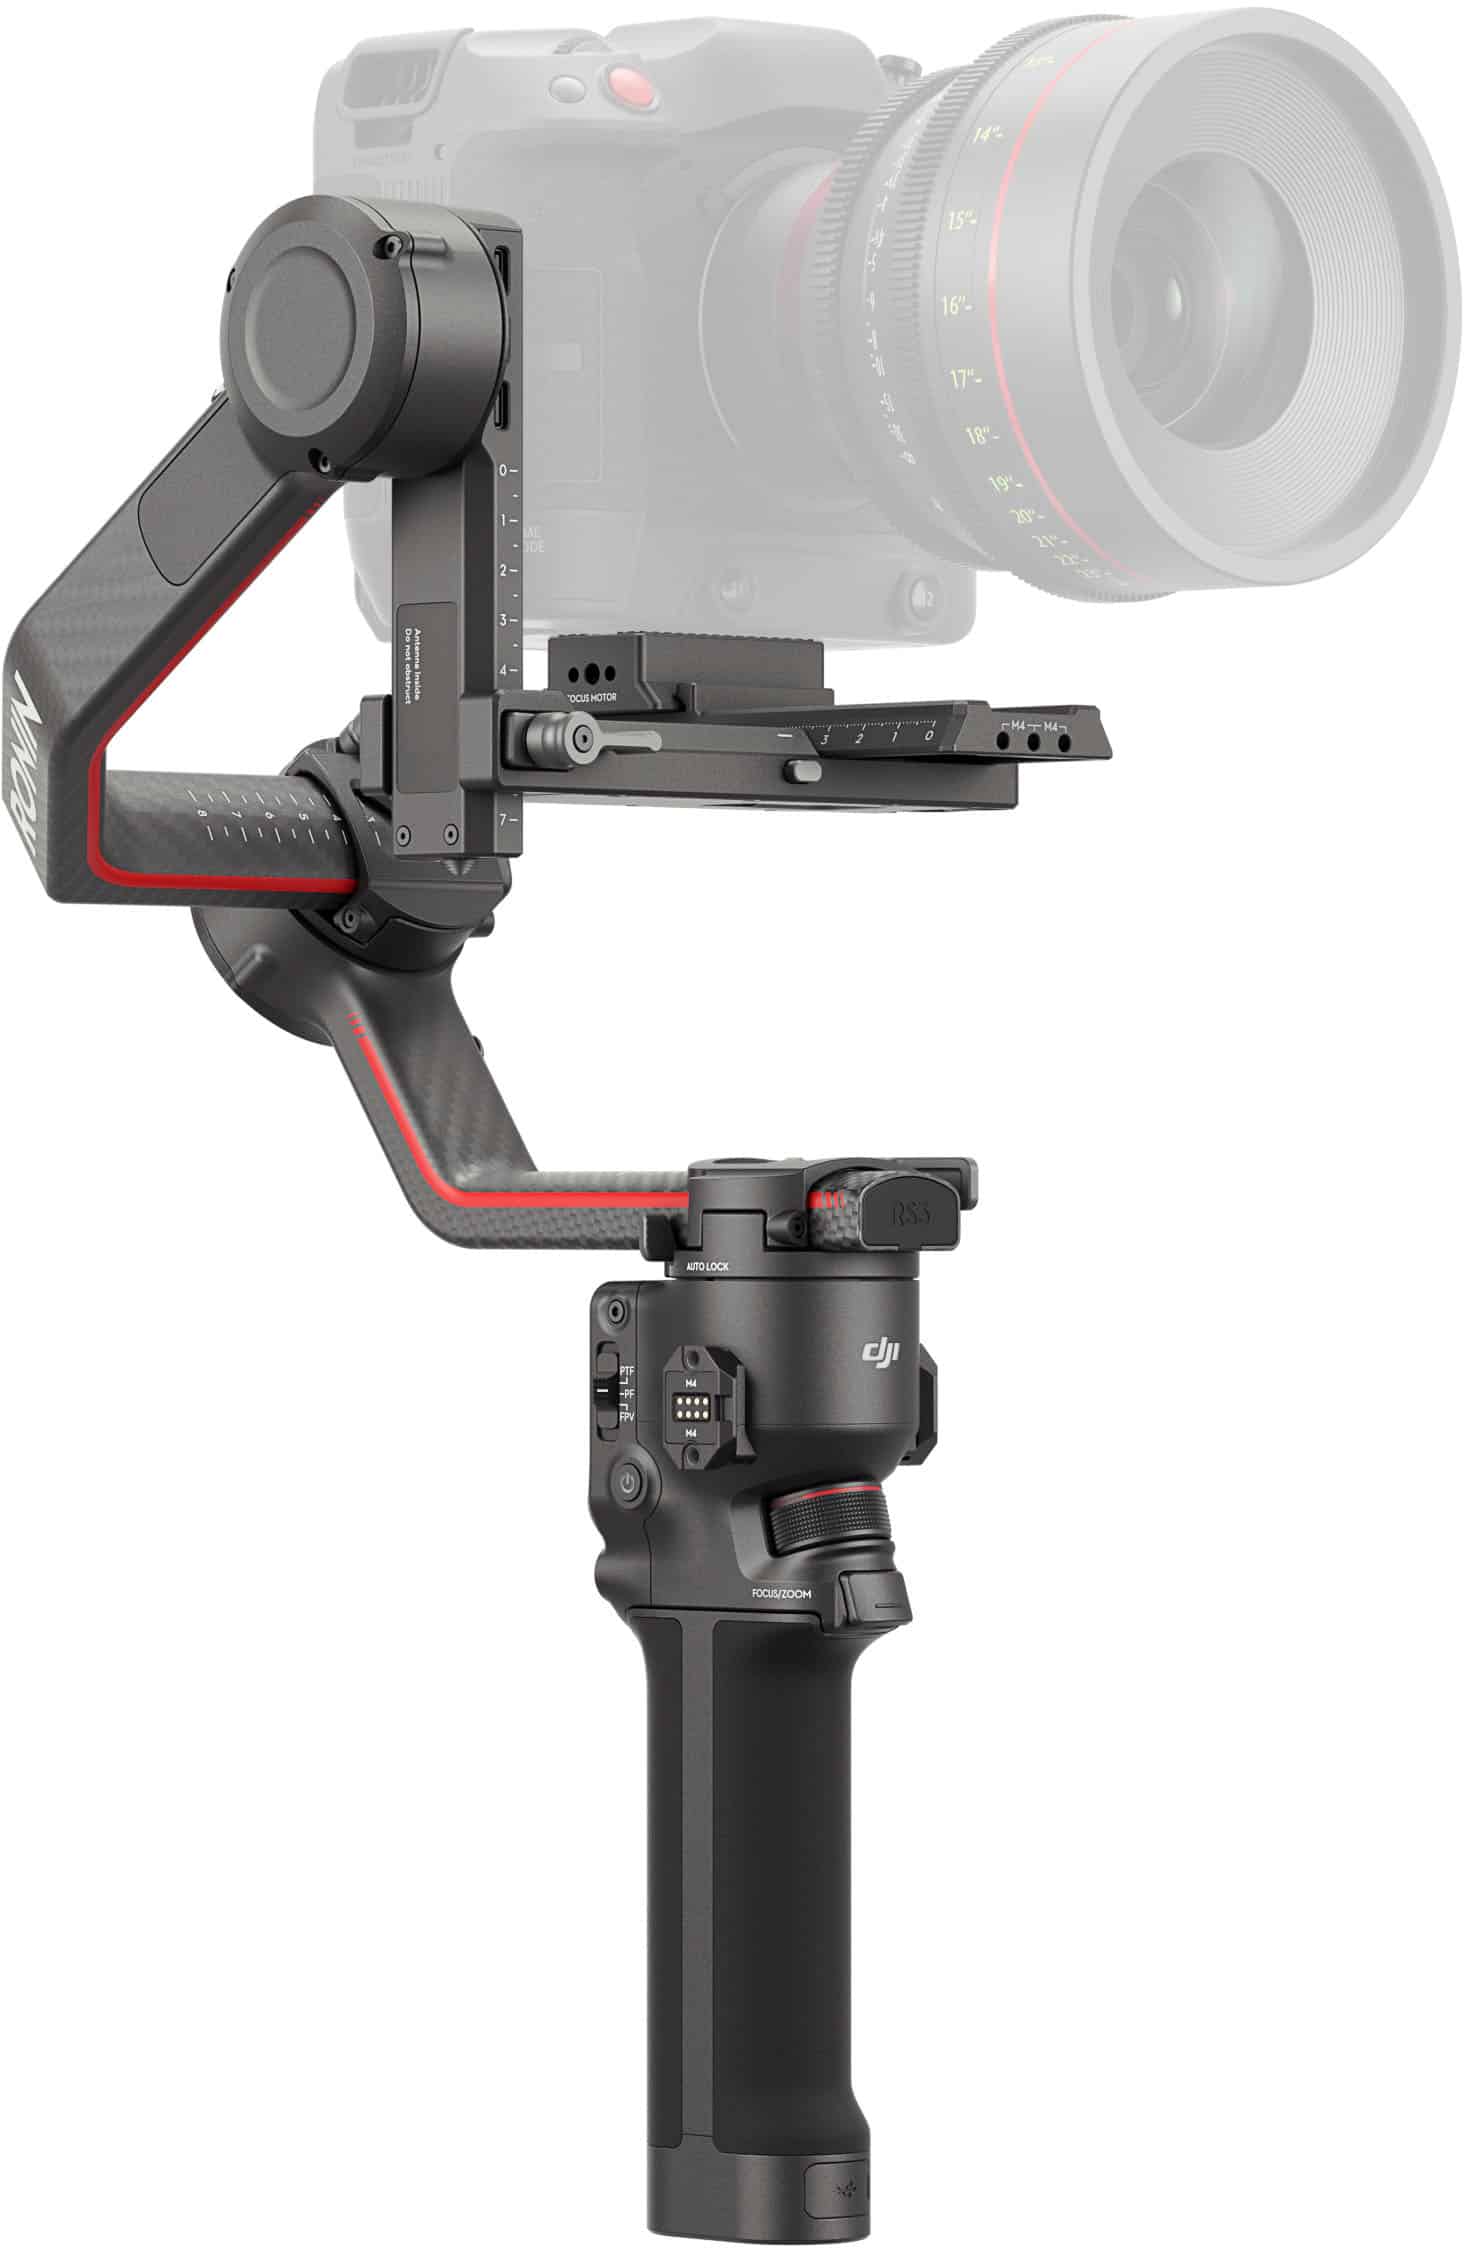 DJIの新型カメラジンバル「RS 3」の製品画像がリーク